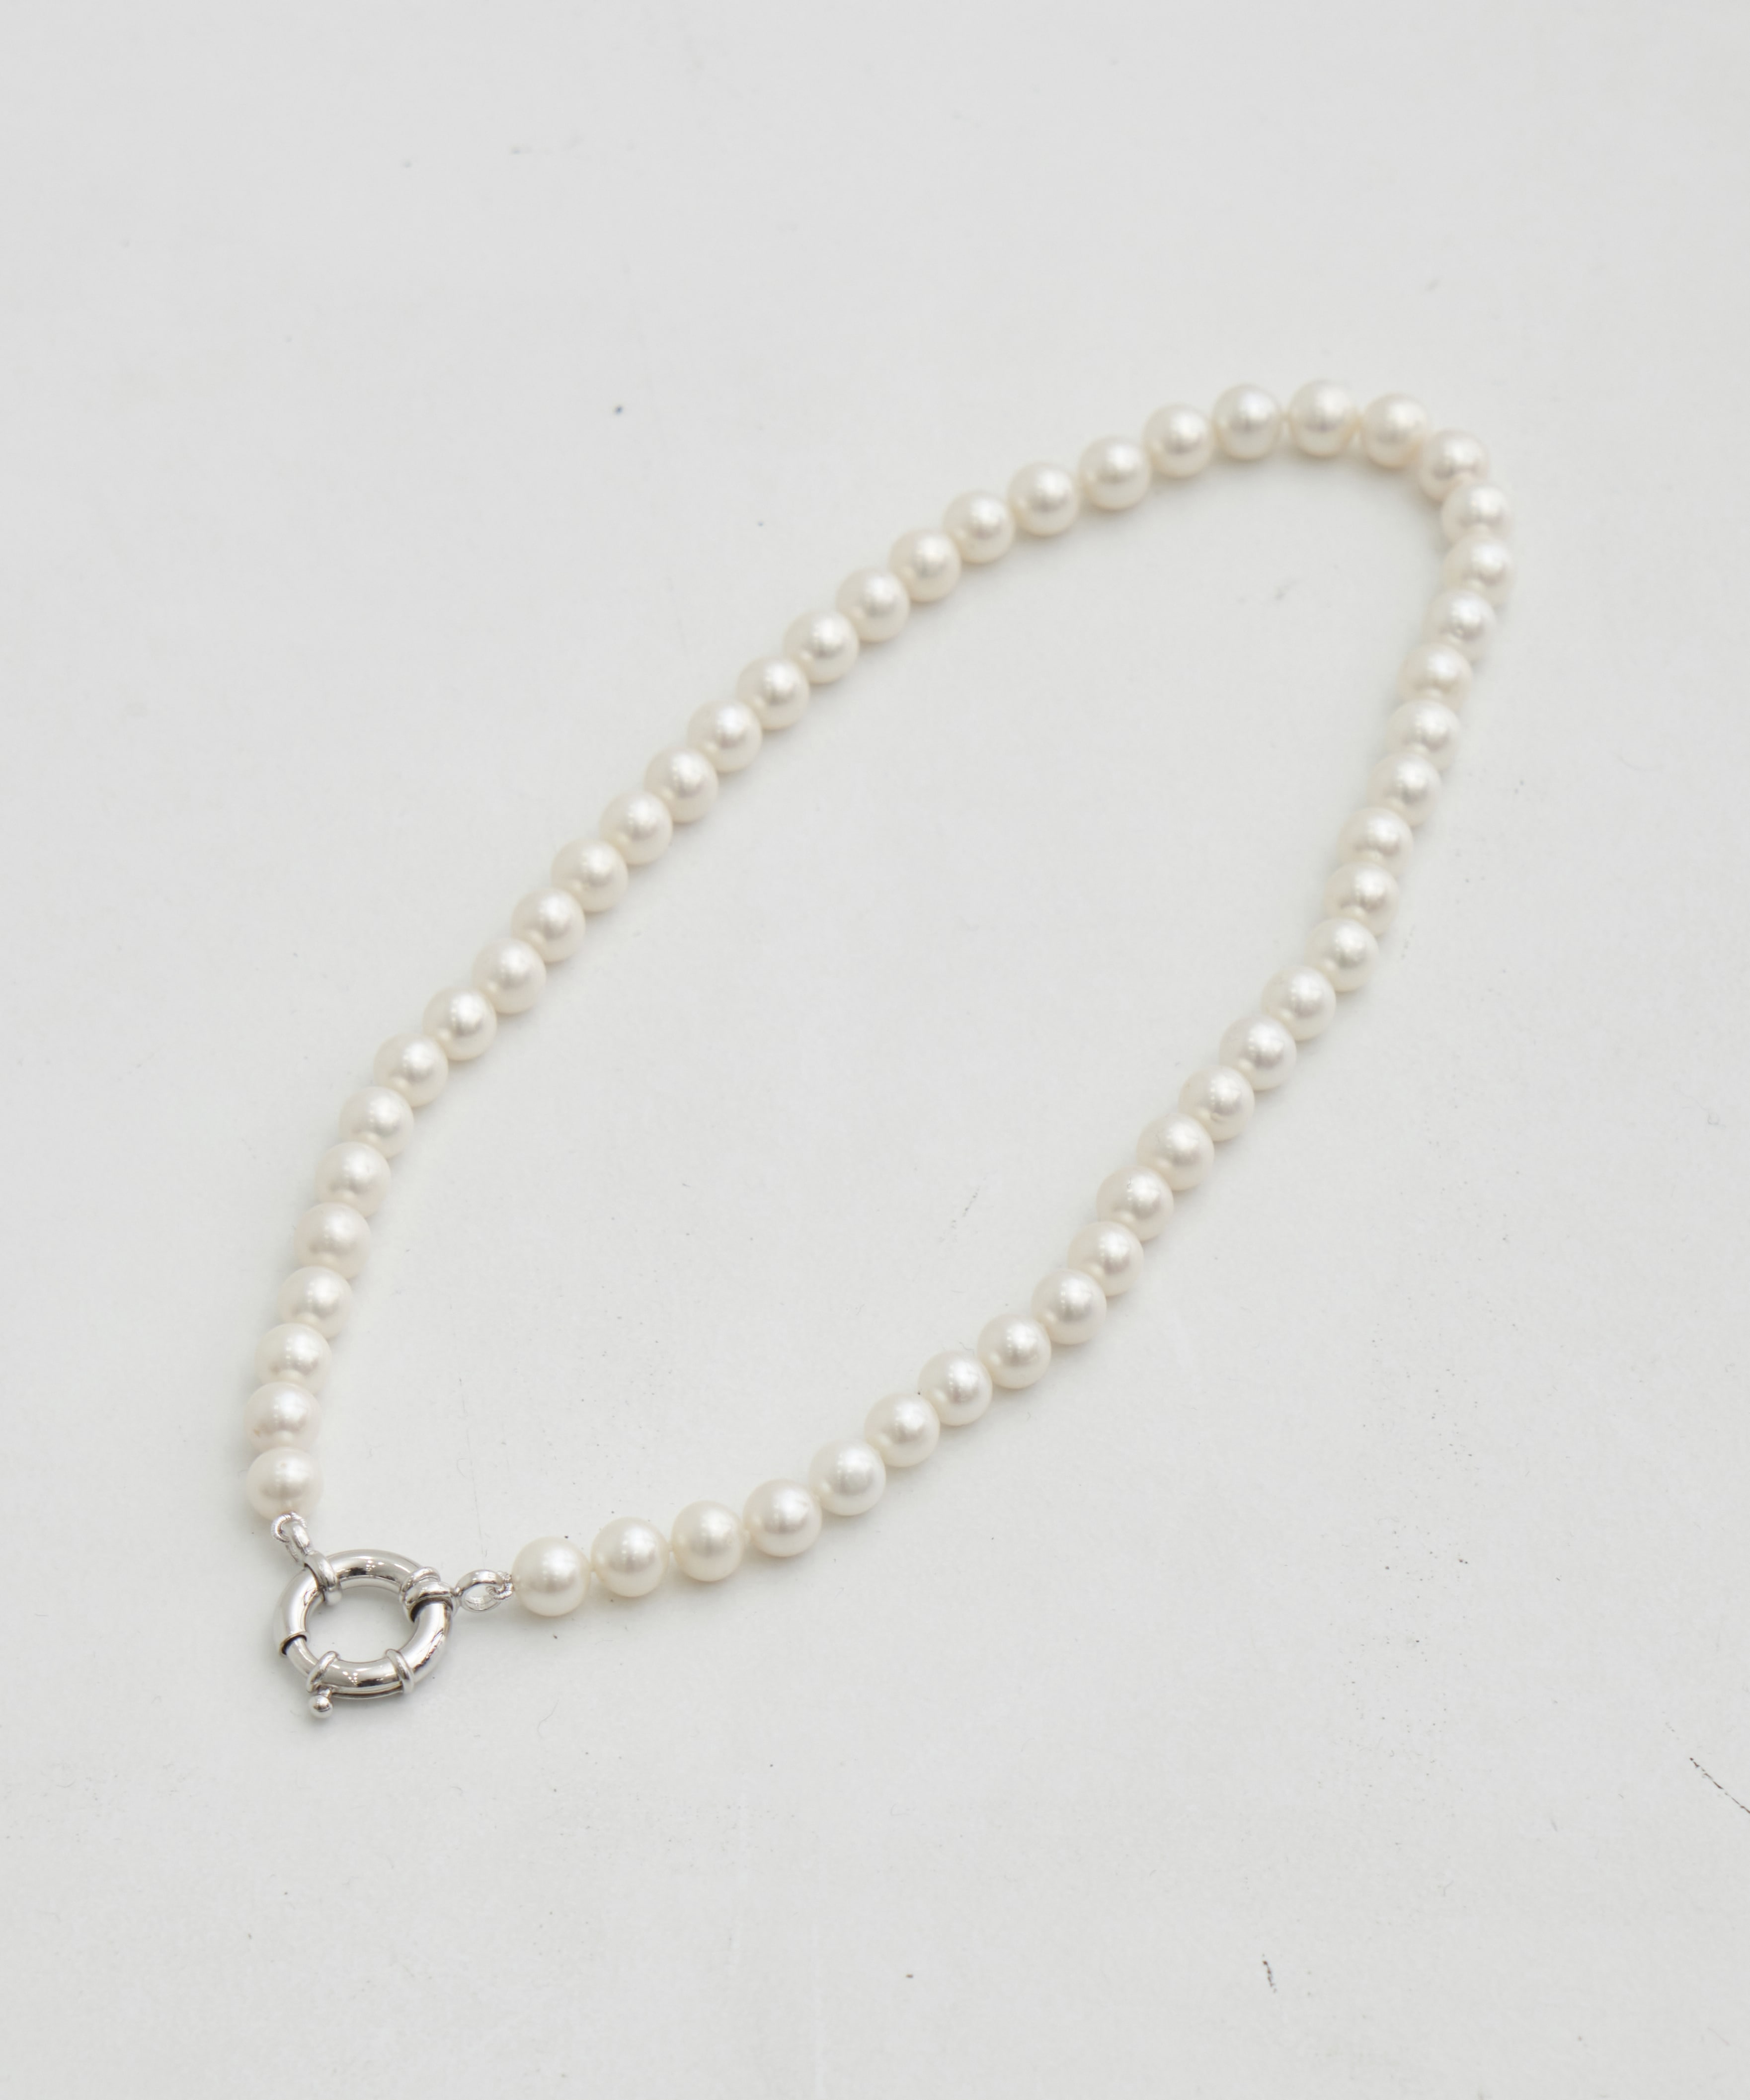 Genderless pearl necklace